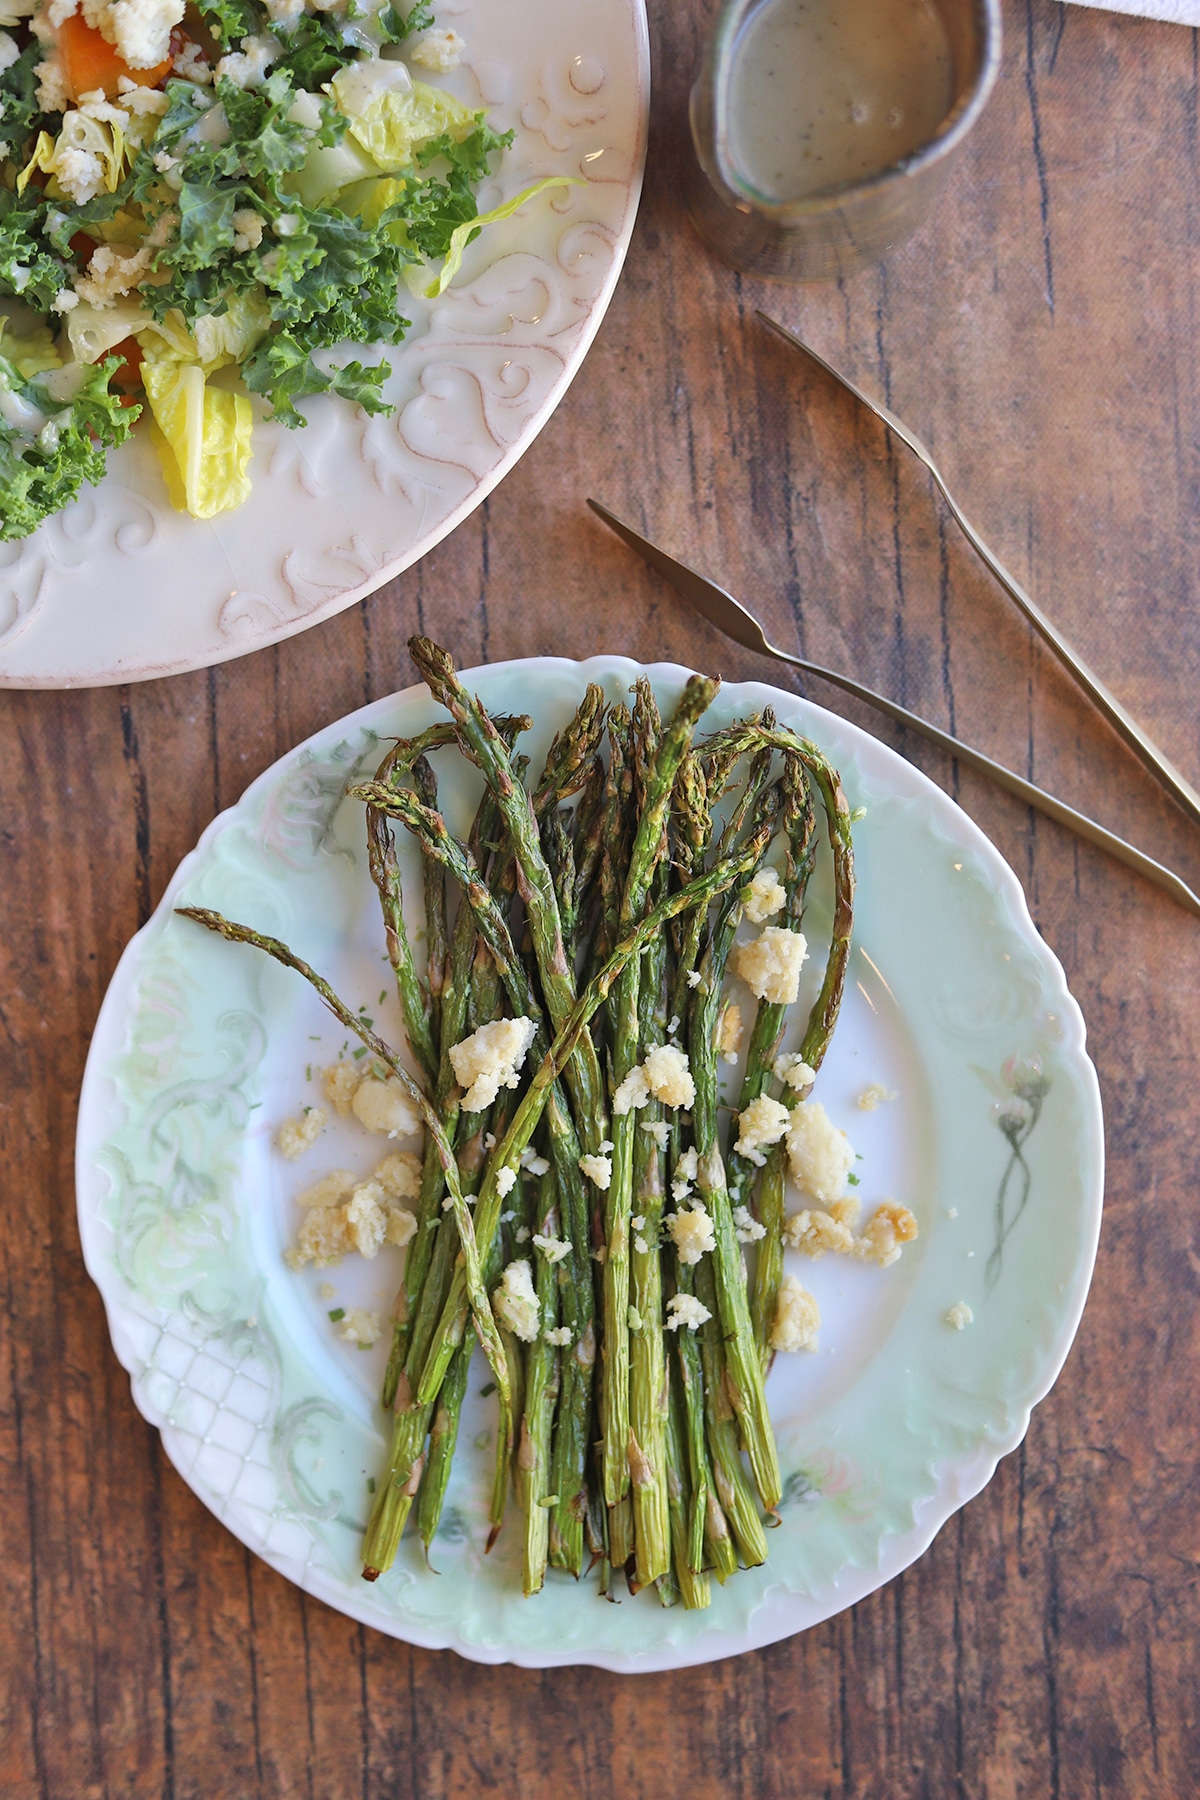 Air fried asparagus on plate by kale salad.